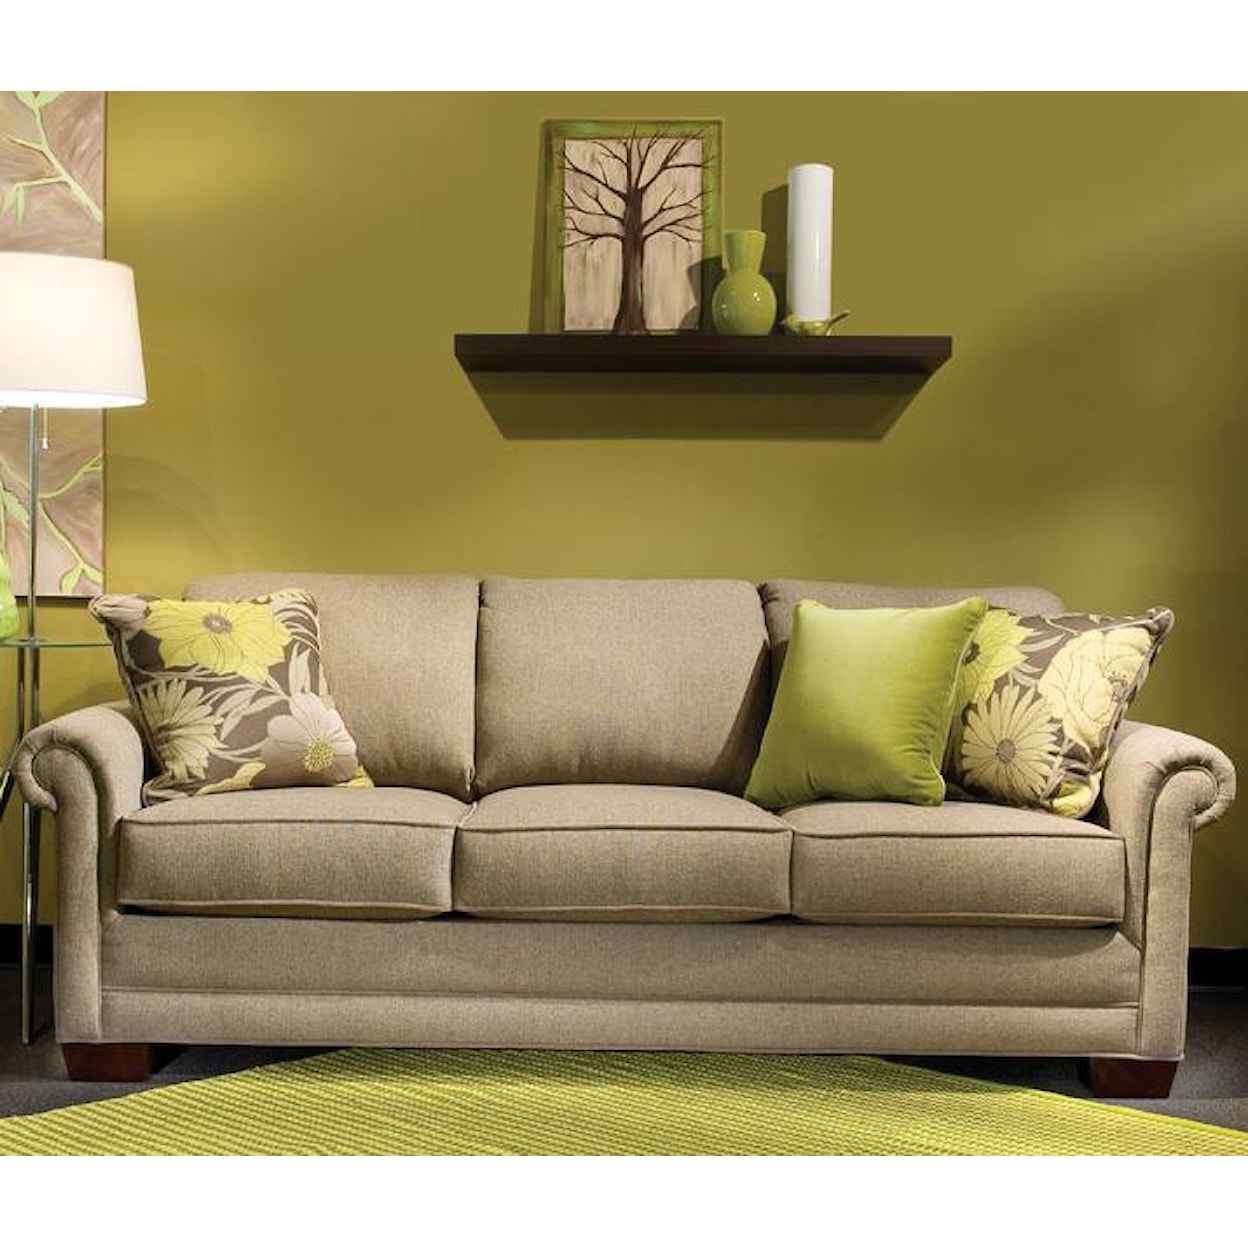 Marshfield Simply Yours Custom Built Queen Sleeper Sofa